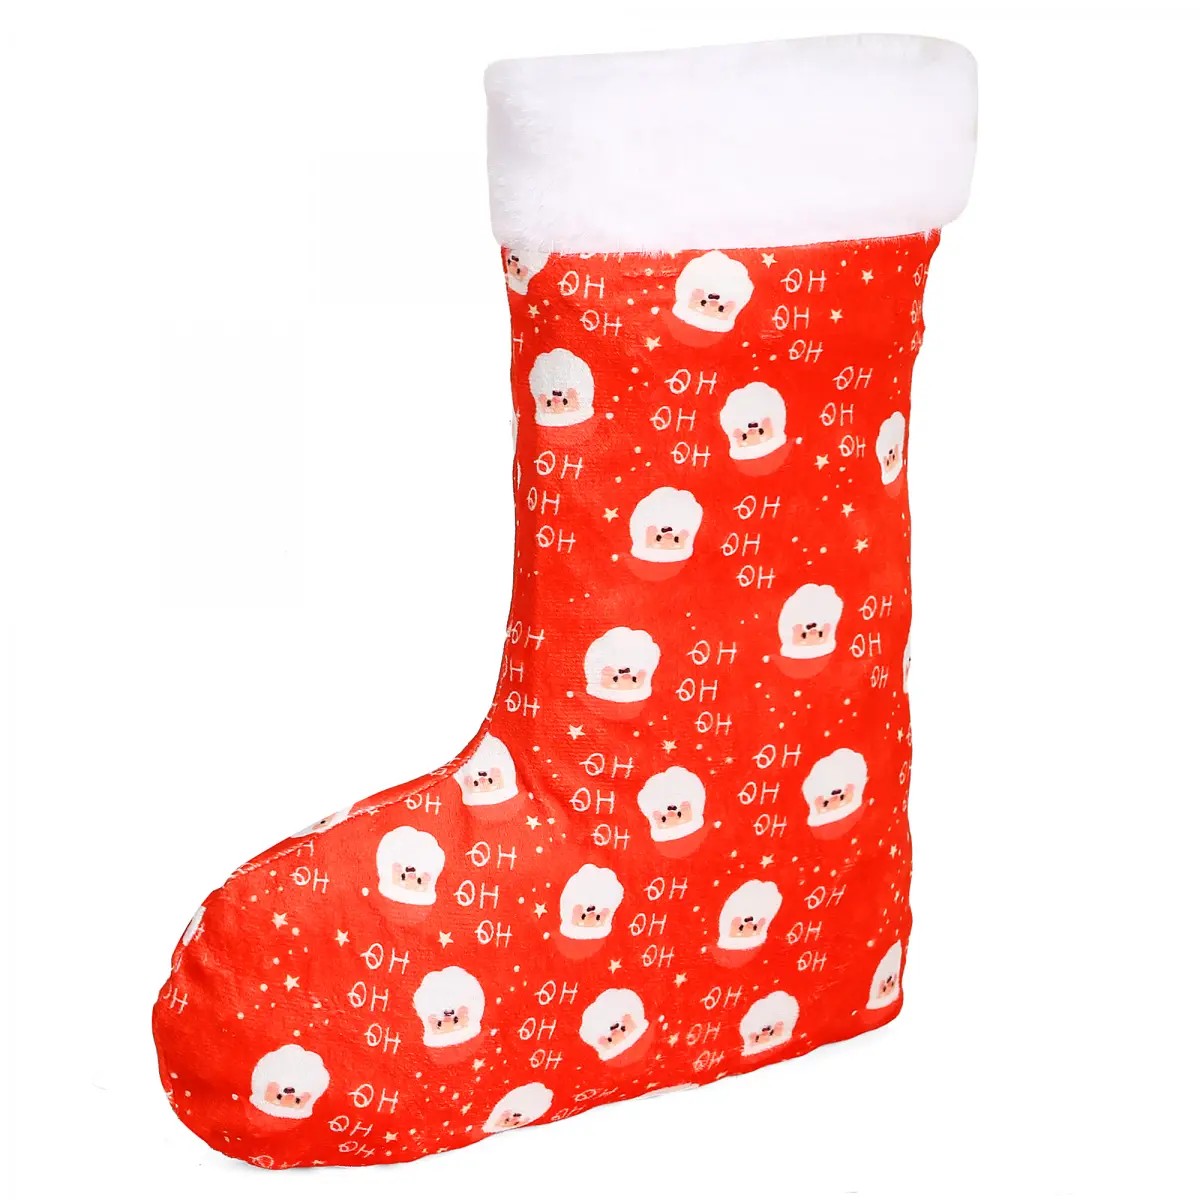 Soft Buddies Premium Printed Santa Stockings, Red